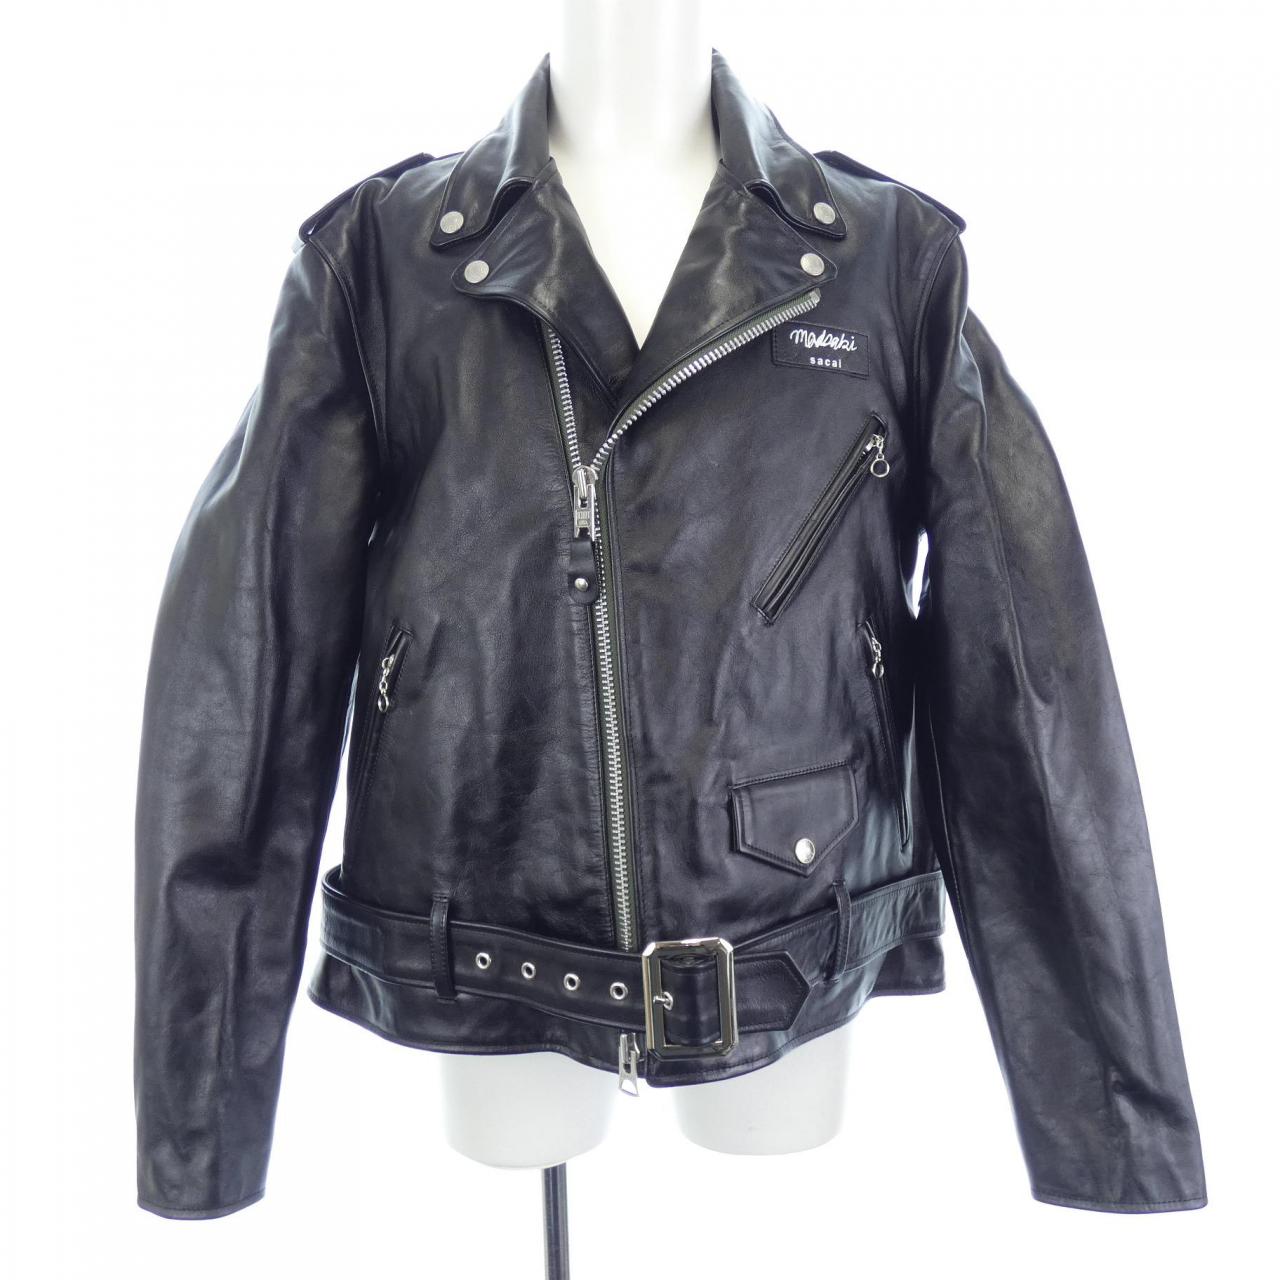 Sakai SACAI leather jacket